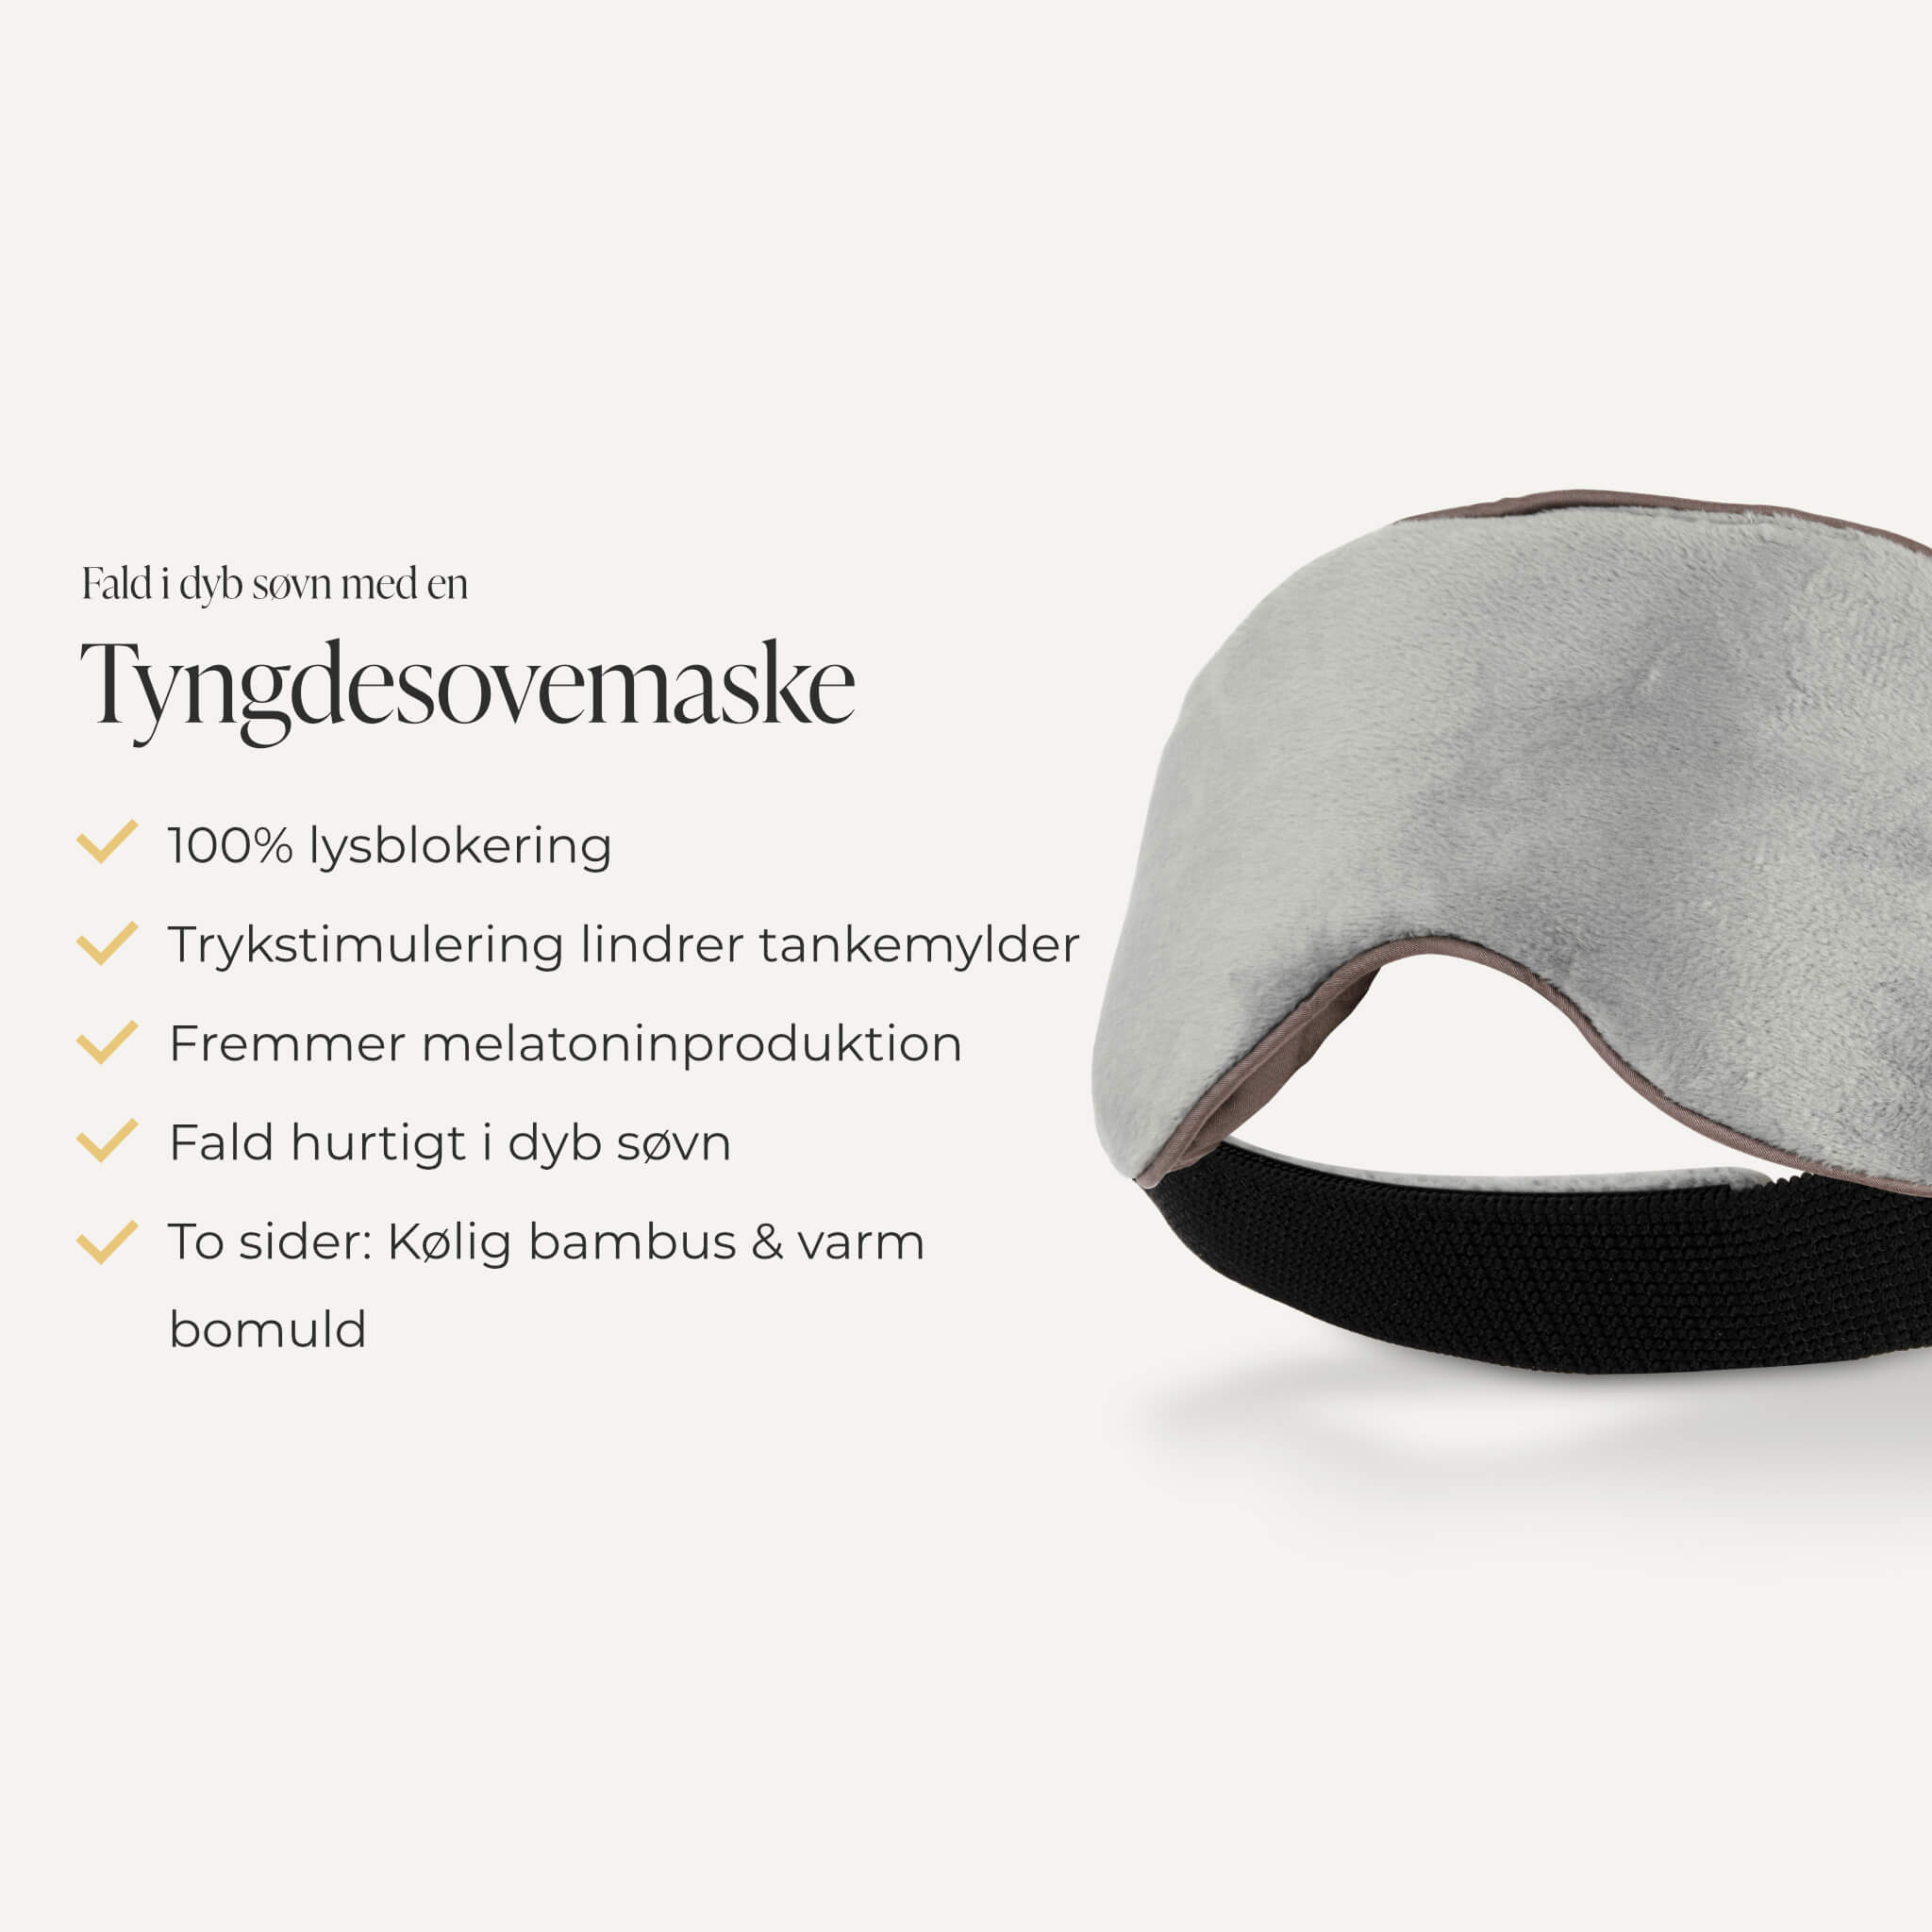 Comforth Tyngdesovemaske